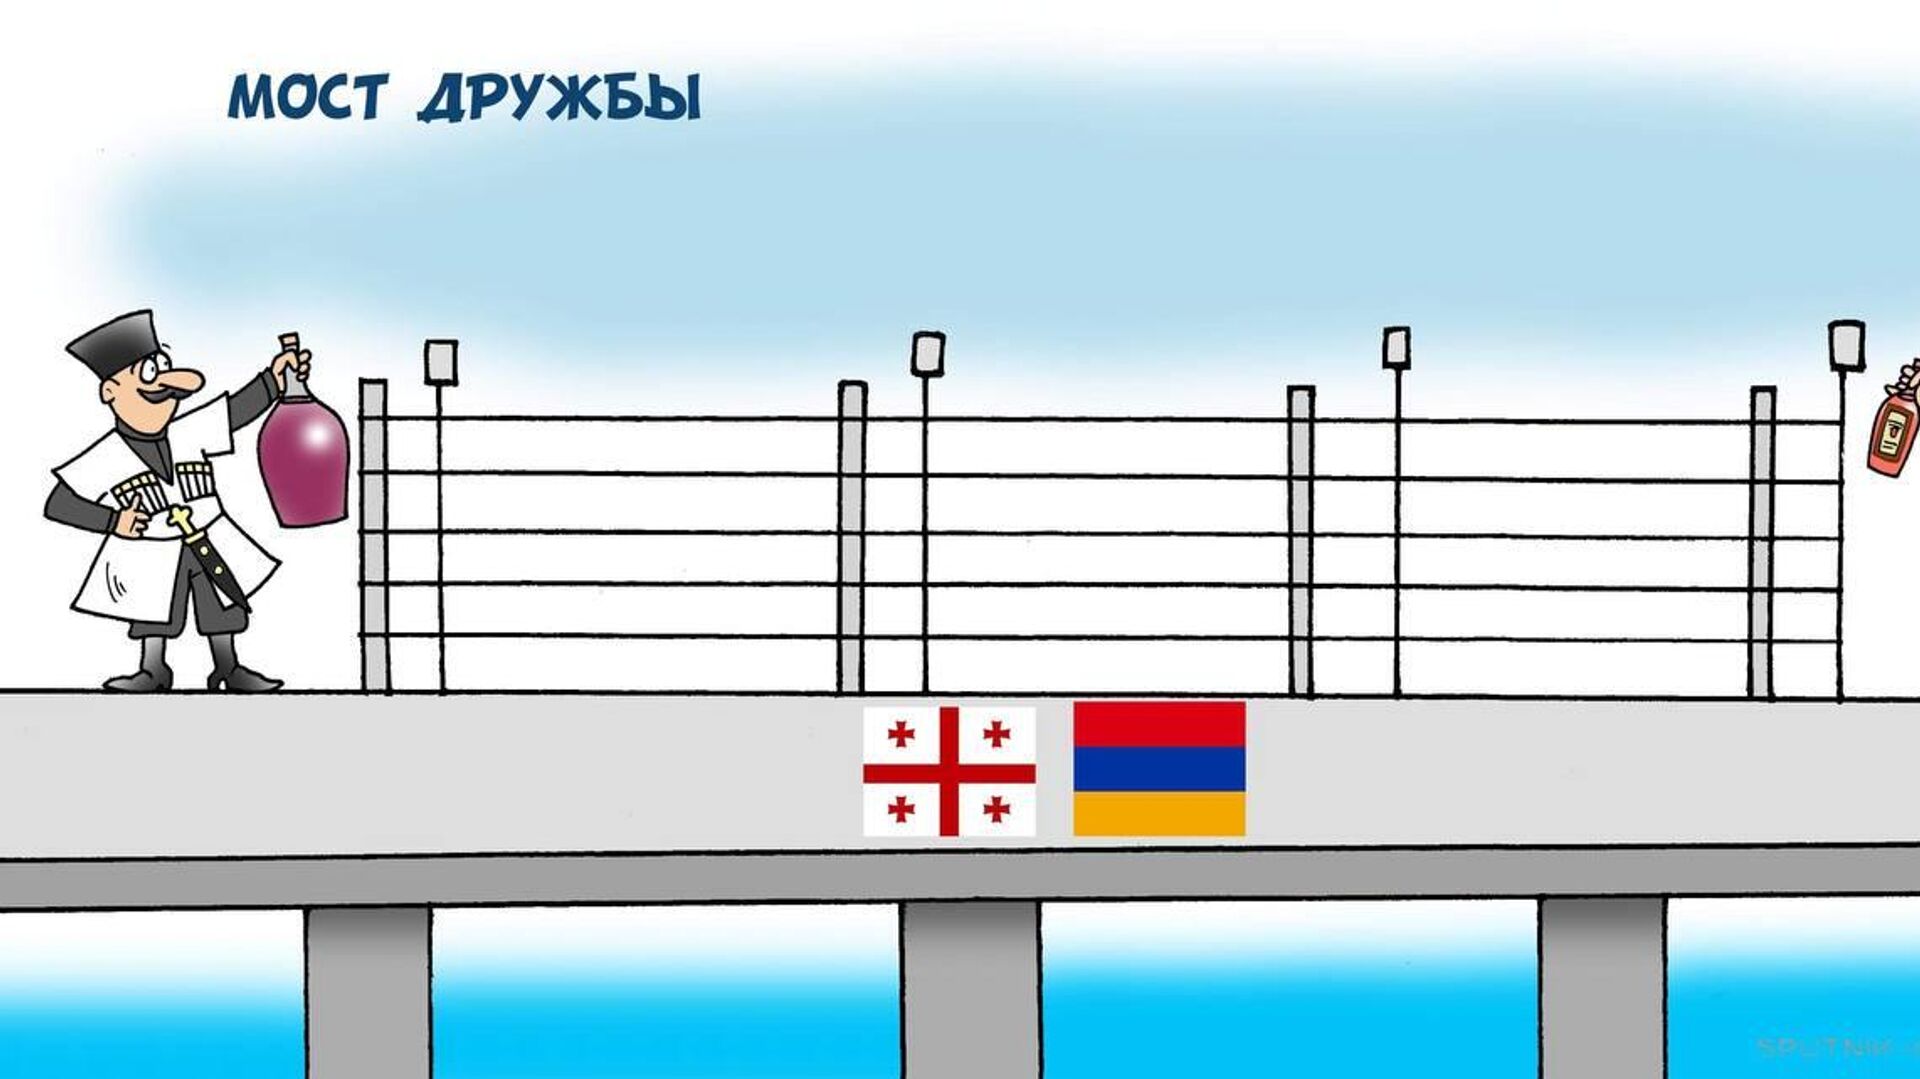 Мост дружбы - карикатура - Sputnik Грузия, 1920, 08.08.2022